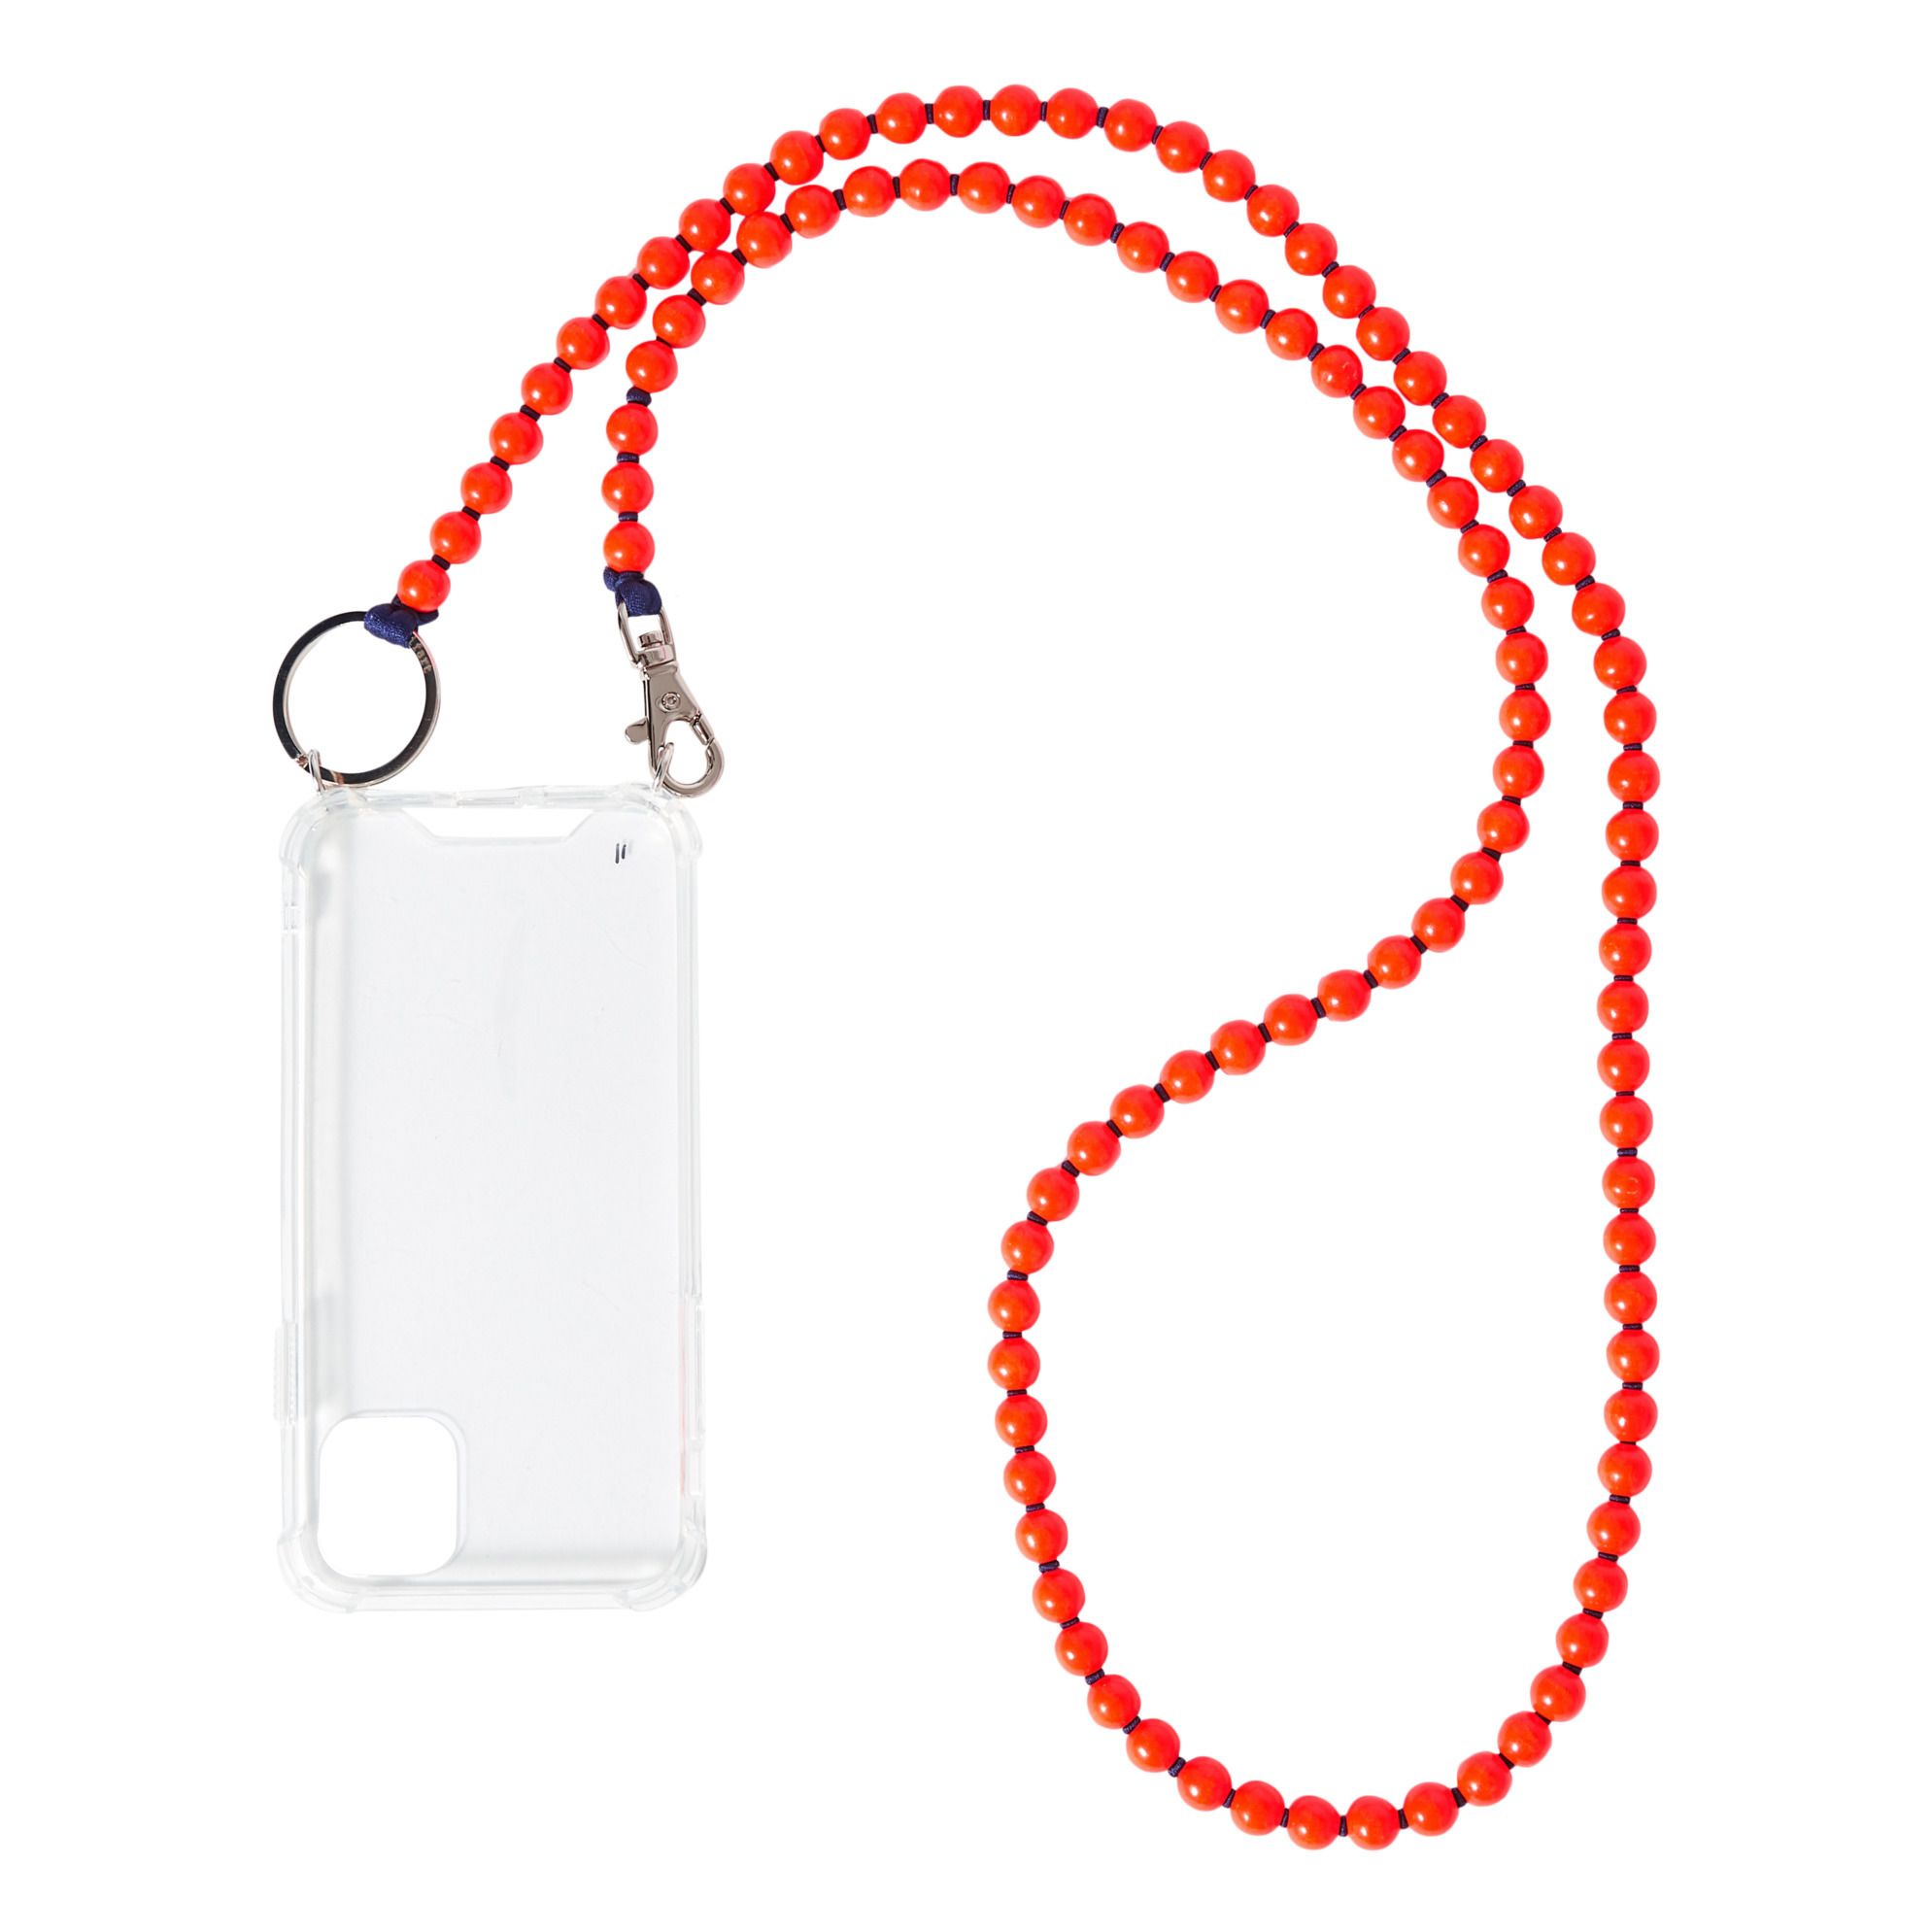 Ina.Seifart - Collier Chaine pour Smartphone - Orange fluo